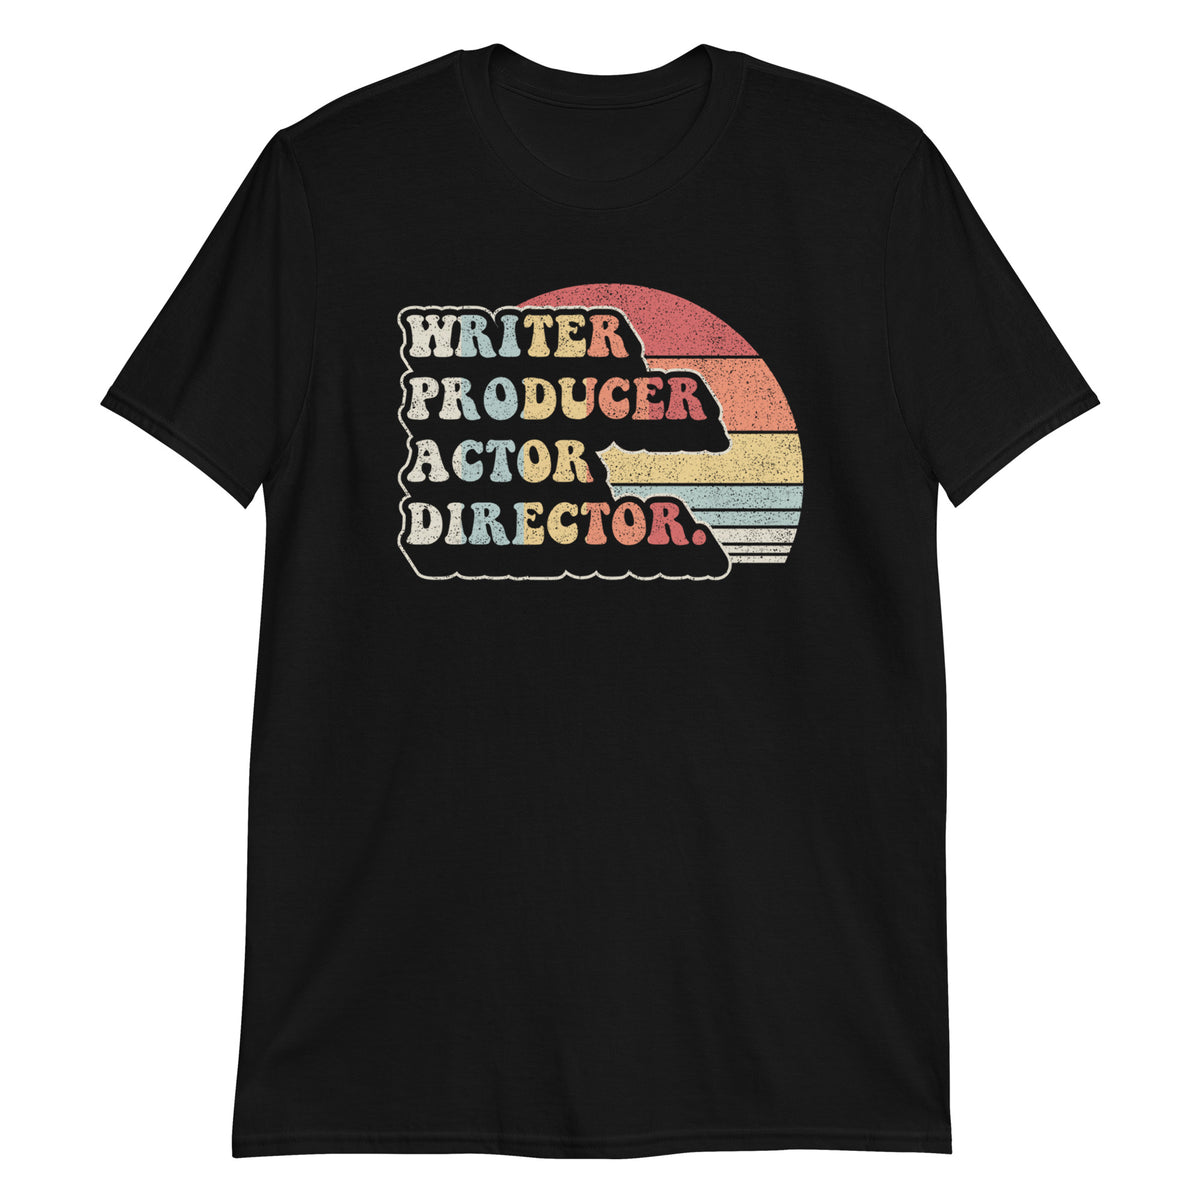 Writer Producer Actor Director T-Shirt